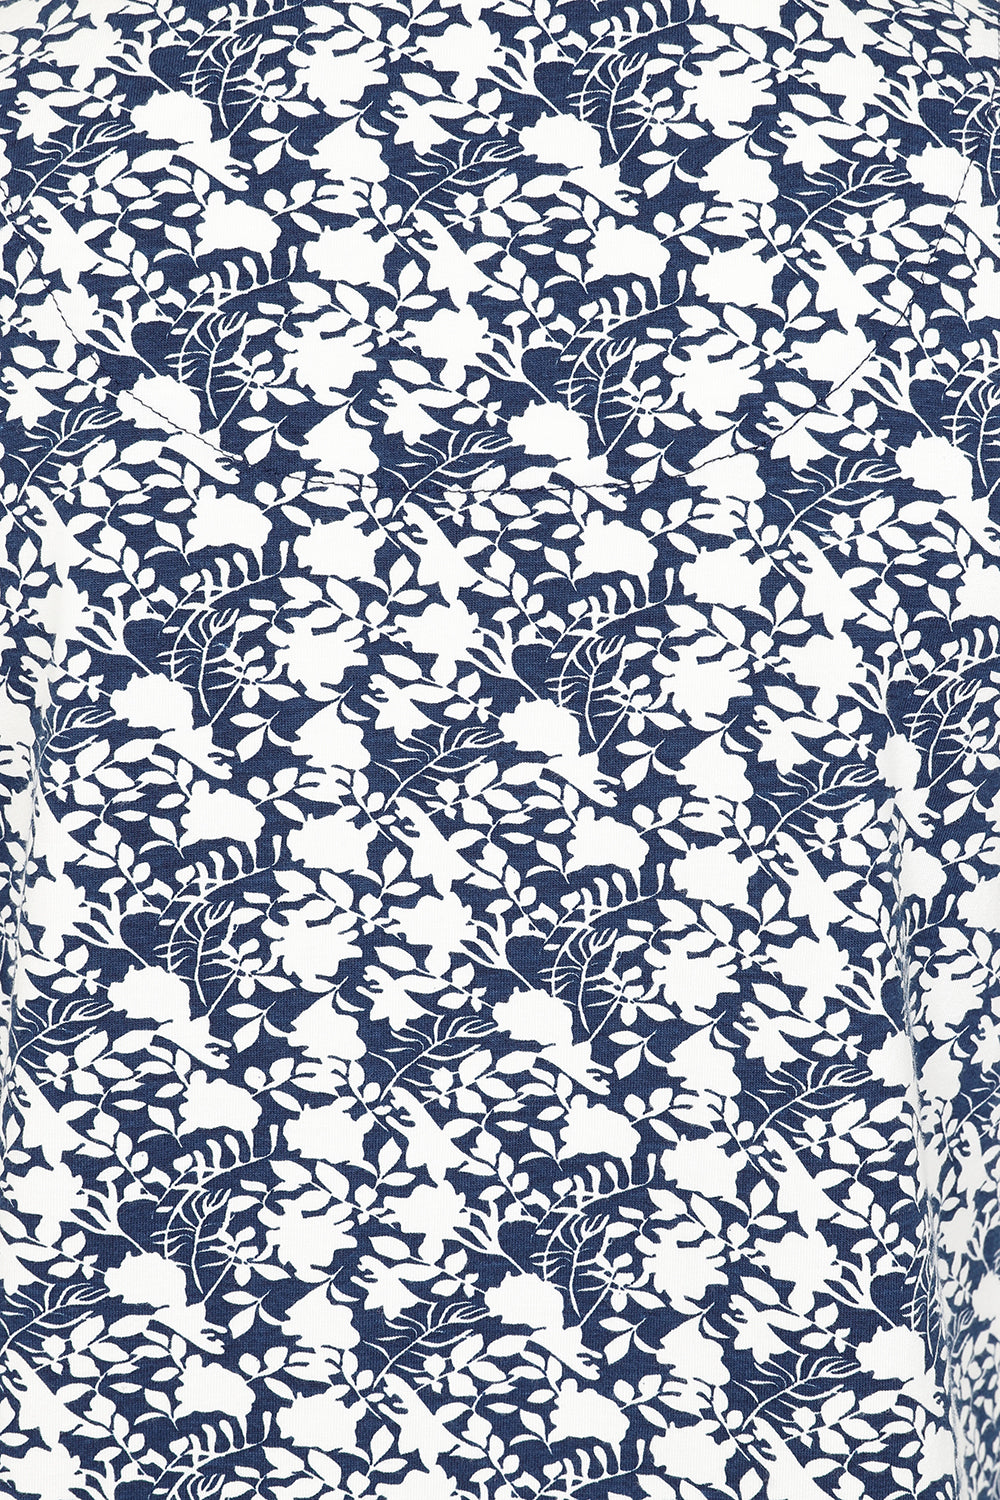 Fauna Top - Navy Foliage print - GOTS Organic Cotton